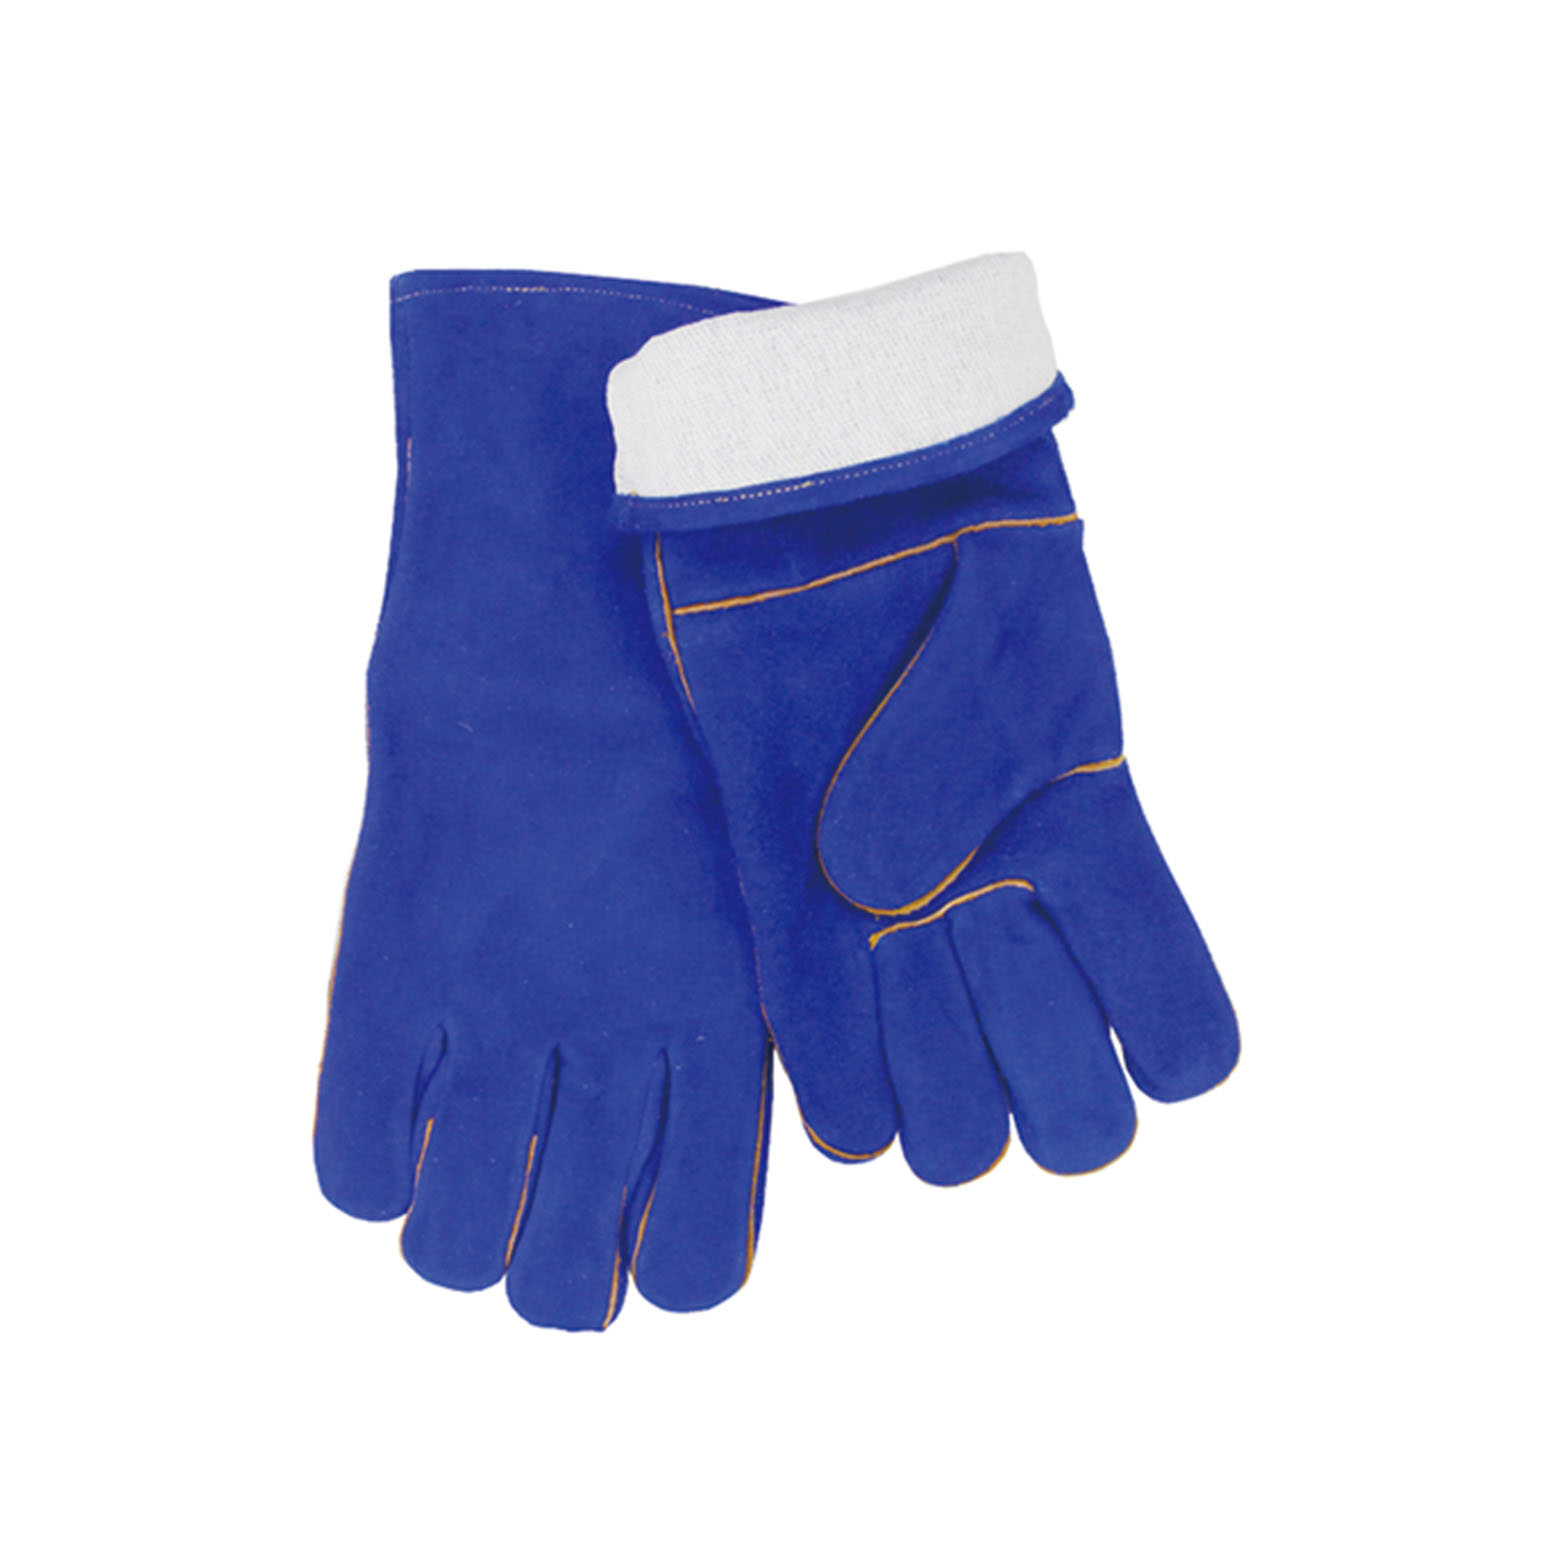 Get Star Weld Blue leather welding gloves